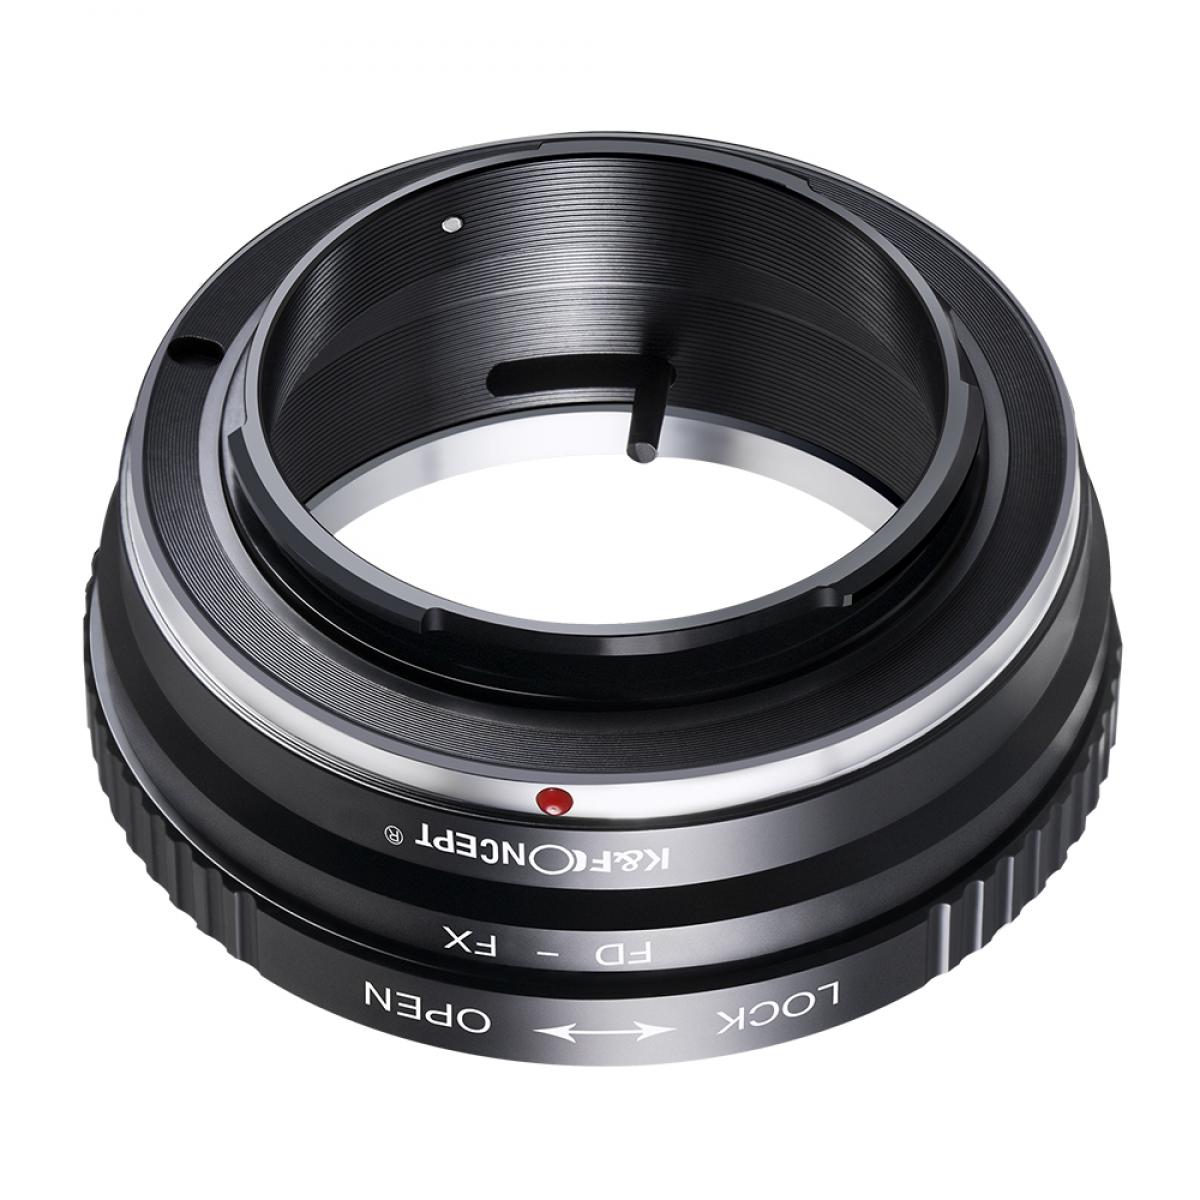 K&F Concept Canon FD Lens to Fujifilm FX Mount Mirrorless Camera Adapter K&F Concept Lens Mount Adapter KF06.108